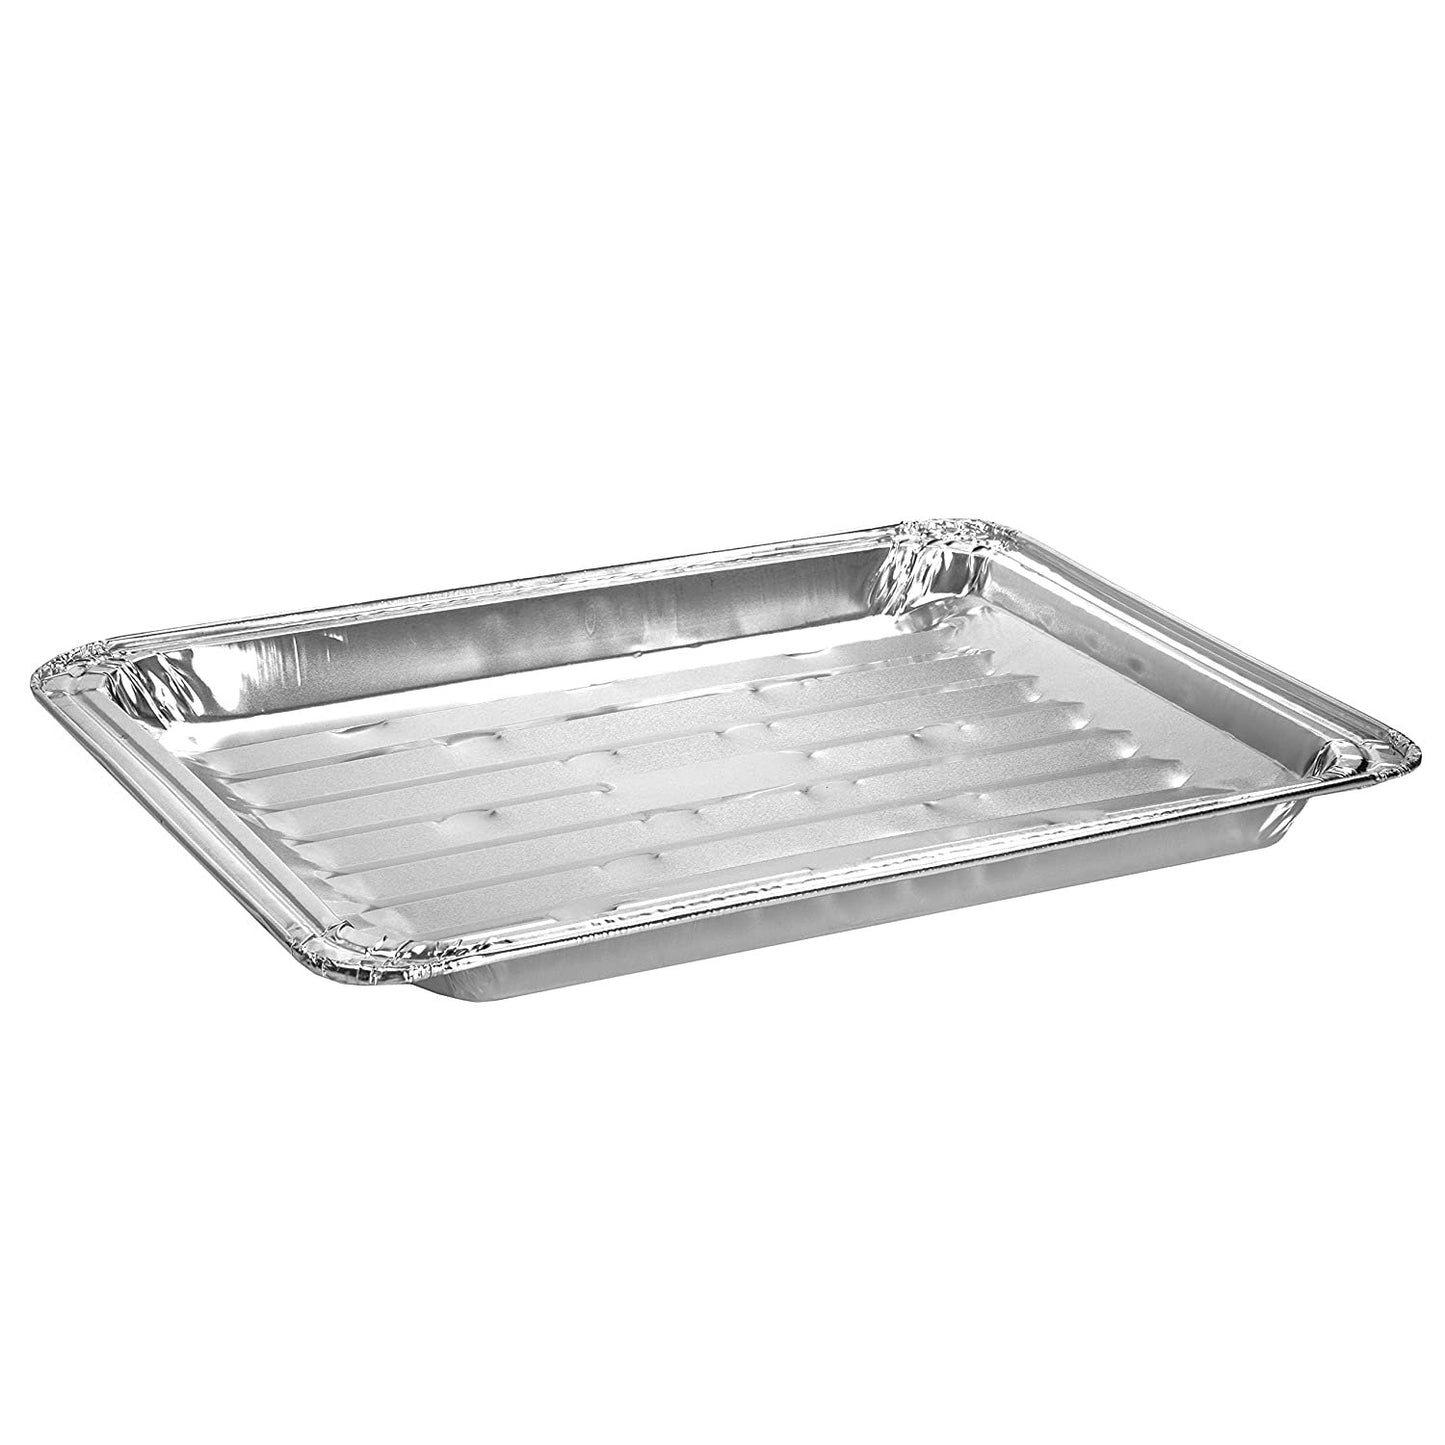 Aluminum Baking pan/Broiling Pan/Foil Tray